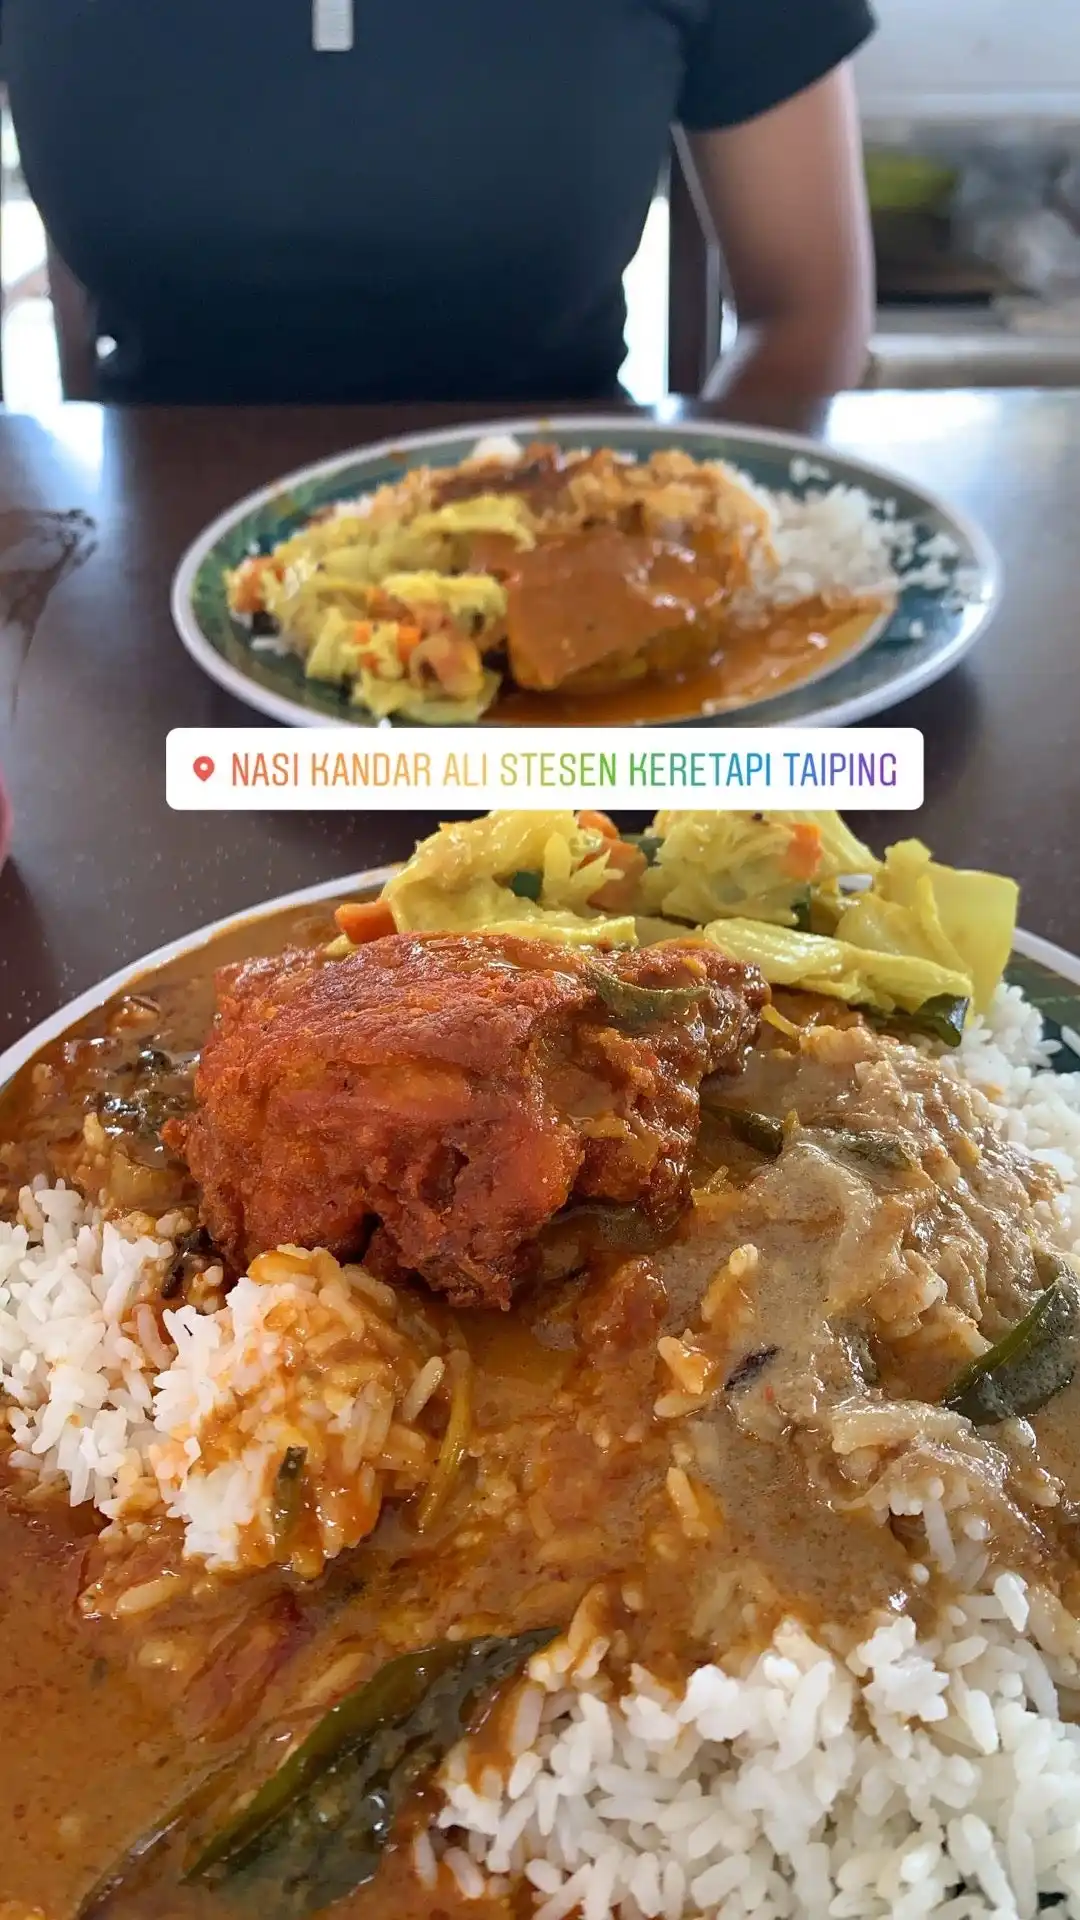 Restoran Nasi Kandar Ali KTM